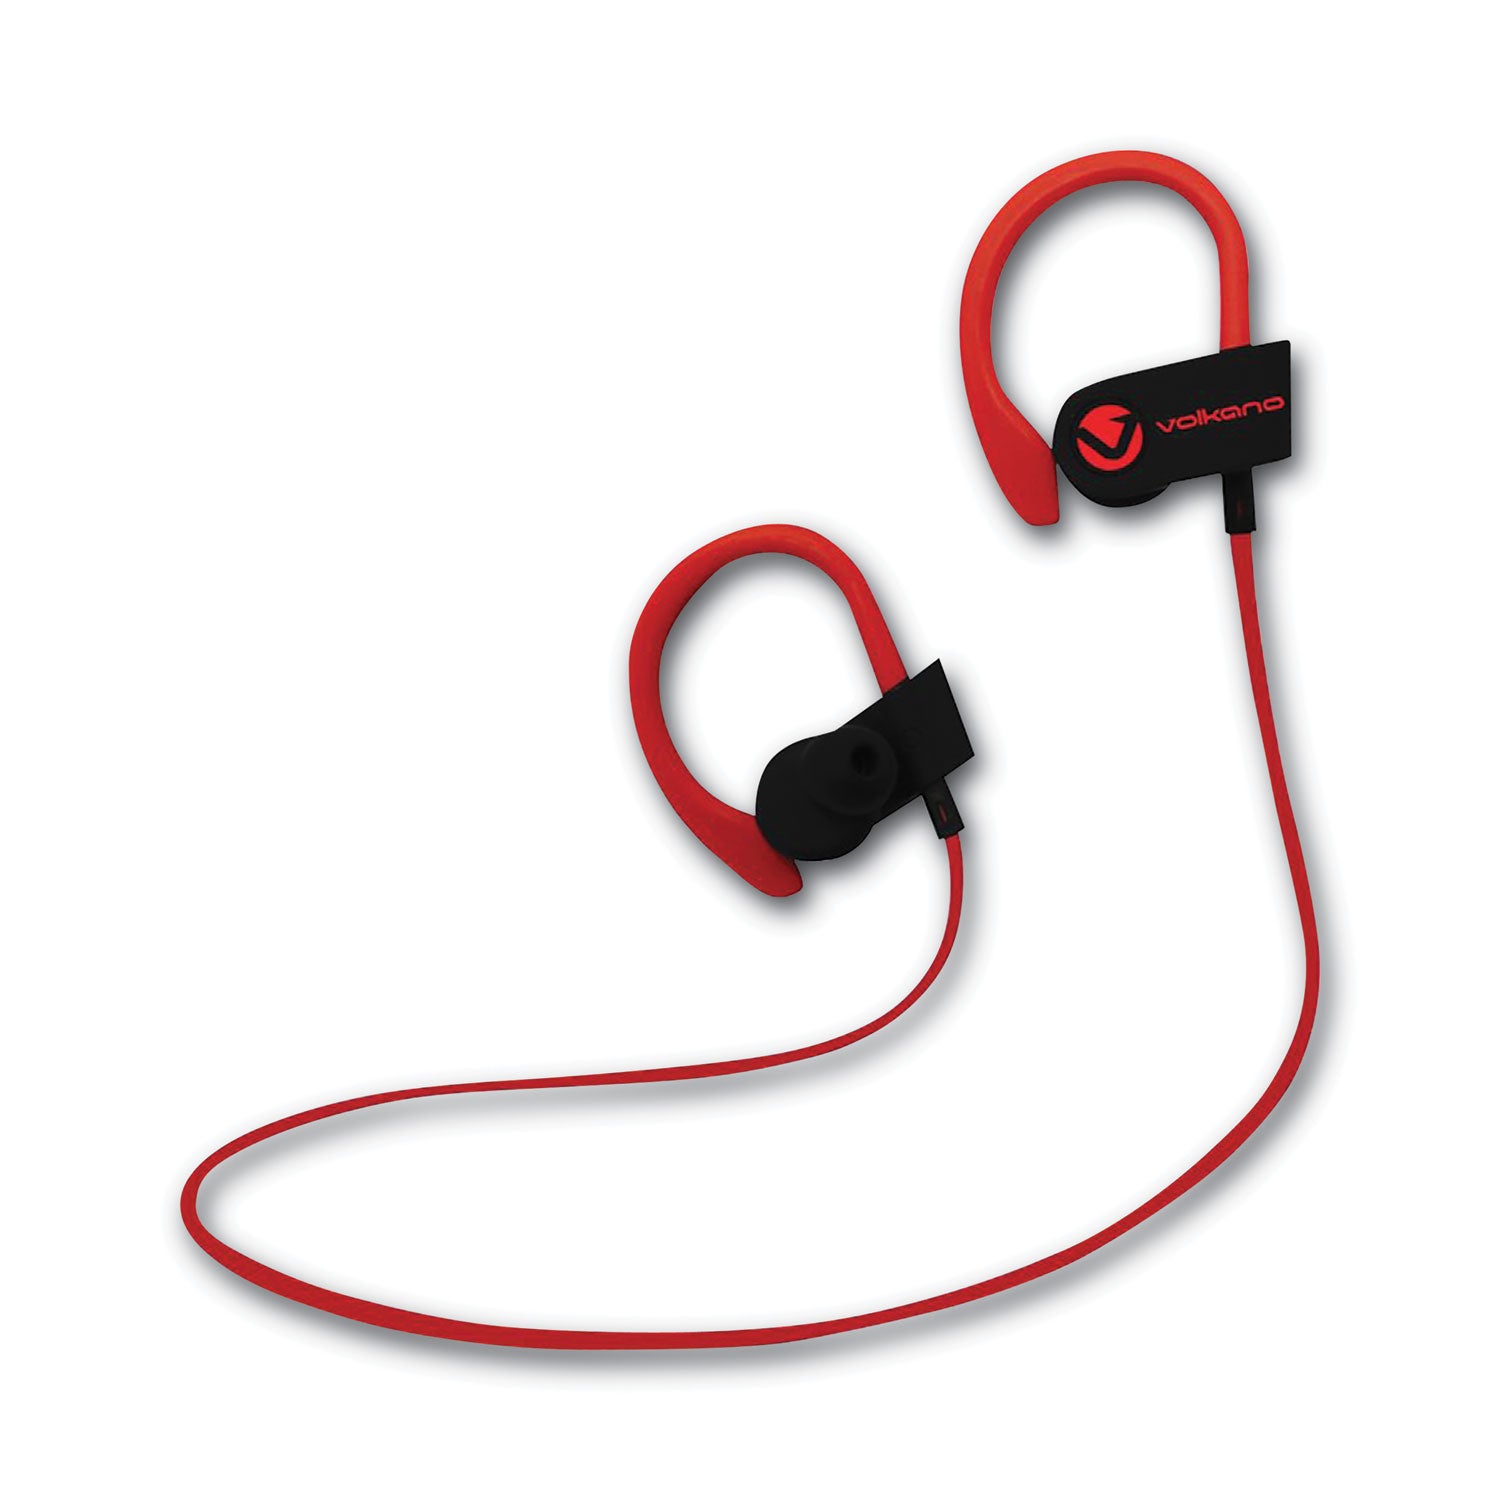 race-series-wireless-bluetooth-42-stereo-earphones-with-built-in-mic-red-black_vlkvk1008bkrd - 1